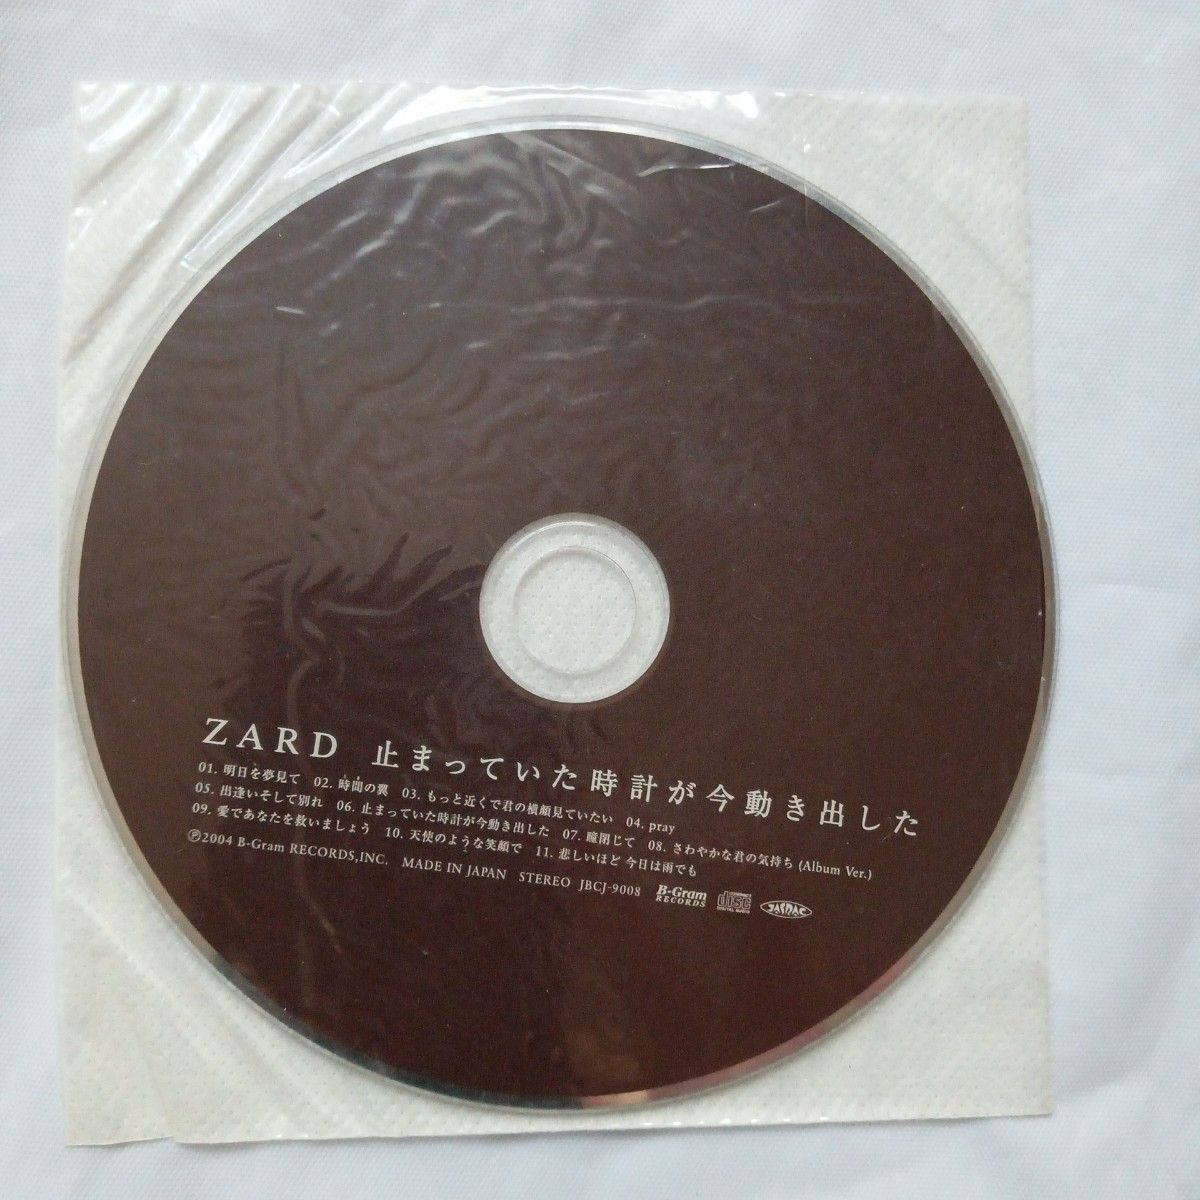 ZARD ザード 坂井泉水 CD DVD アルバム 音楽 邦楽 ポップス  特典DVD